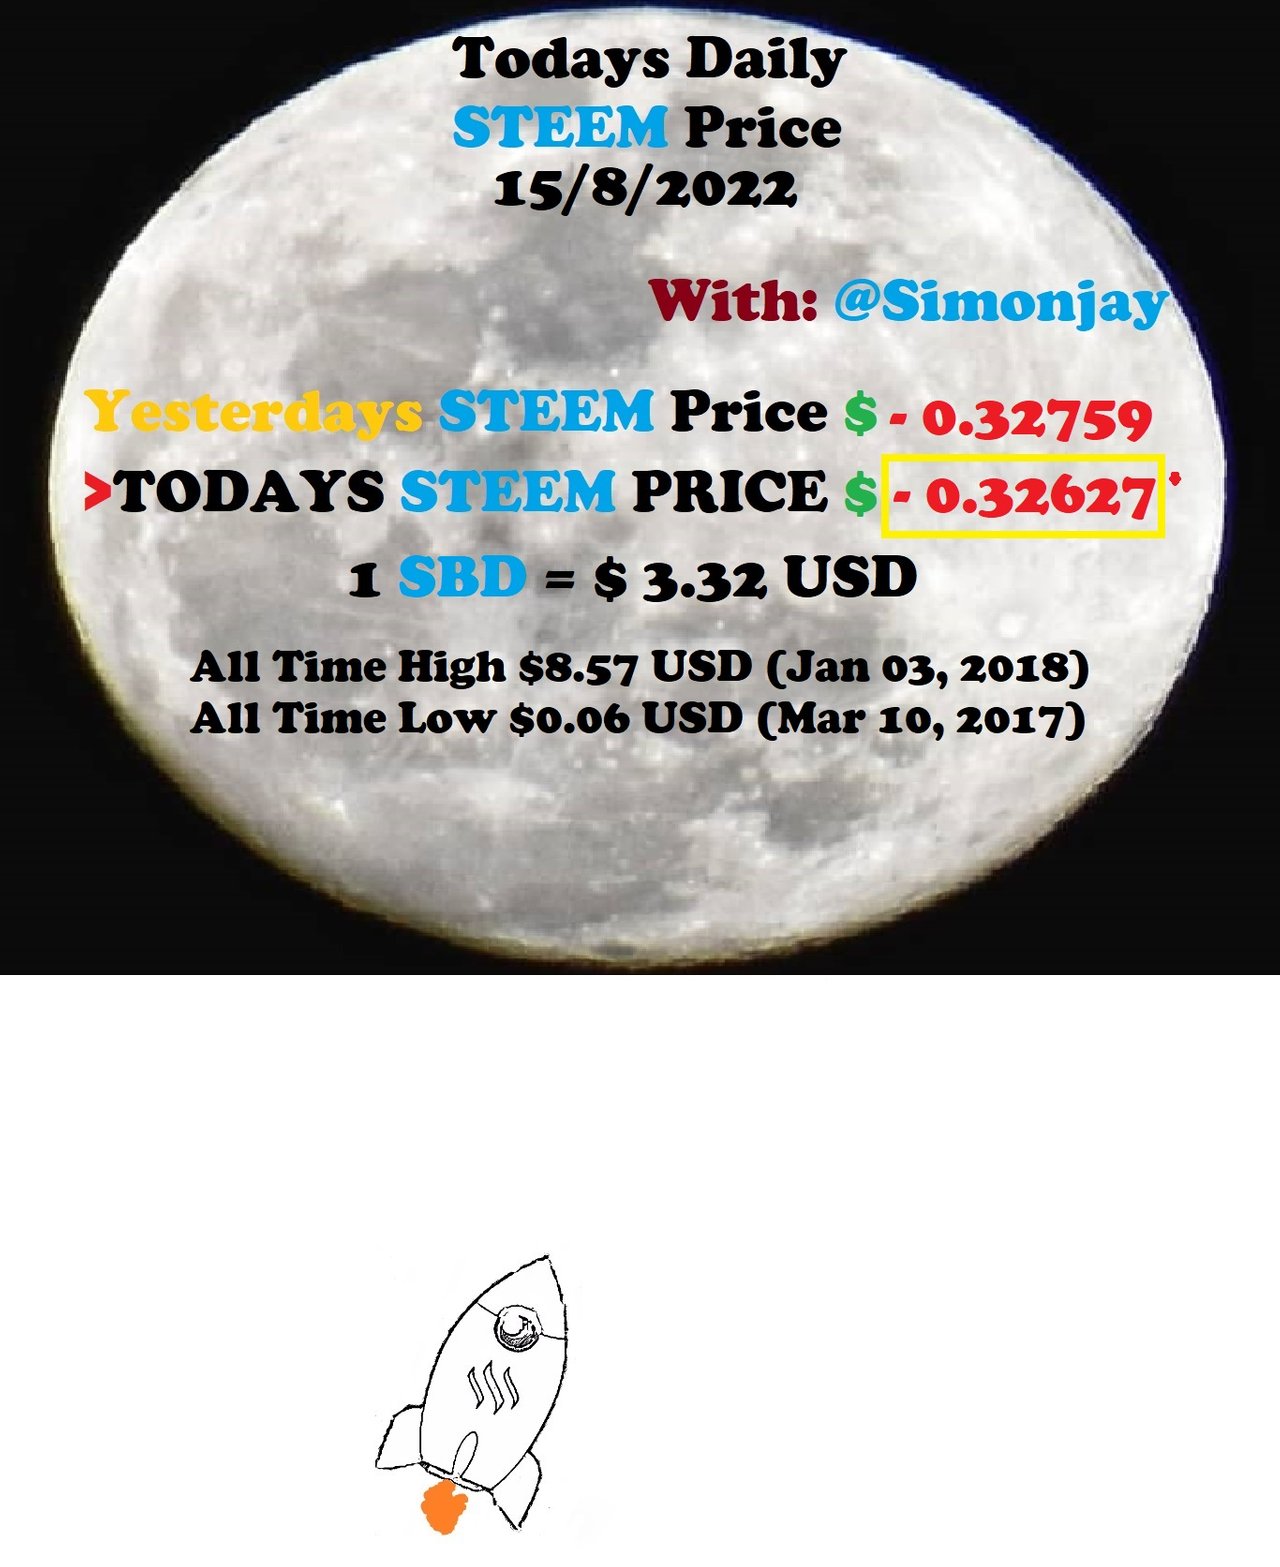 Steem Daily Price MoonTemplate15082022.jpg